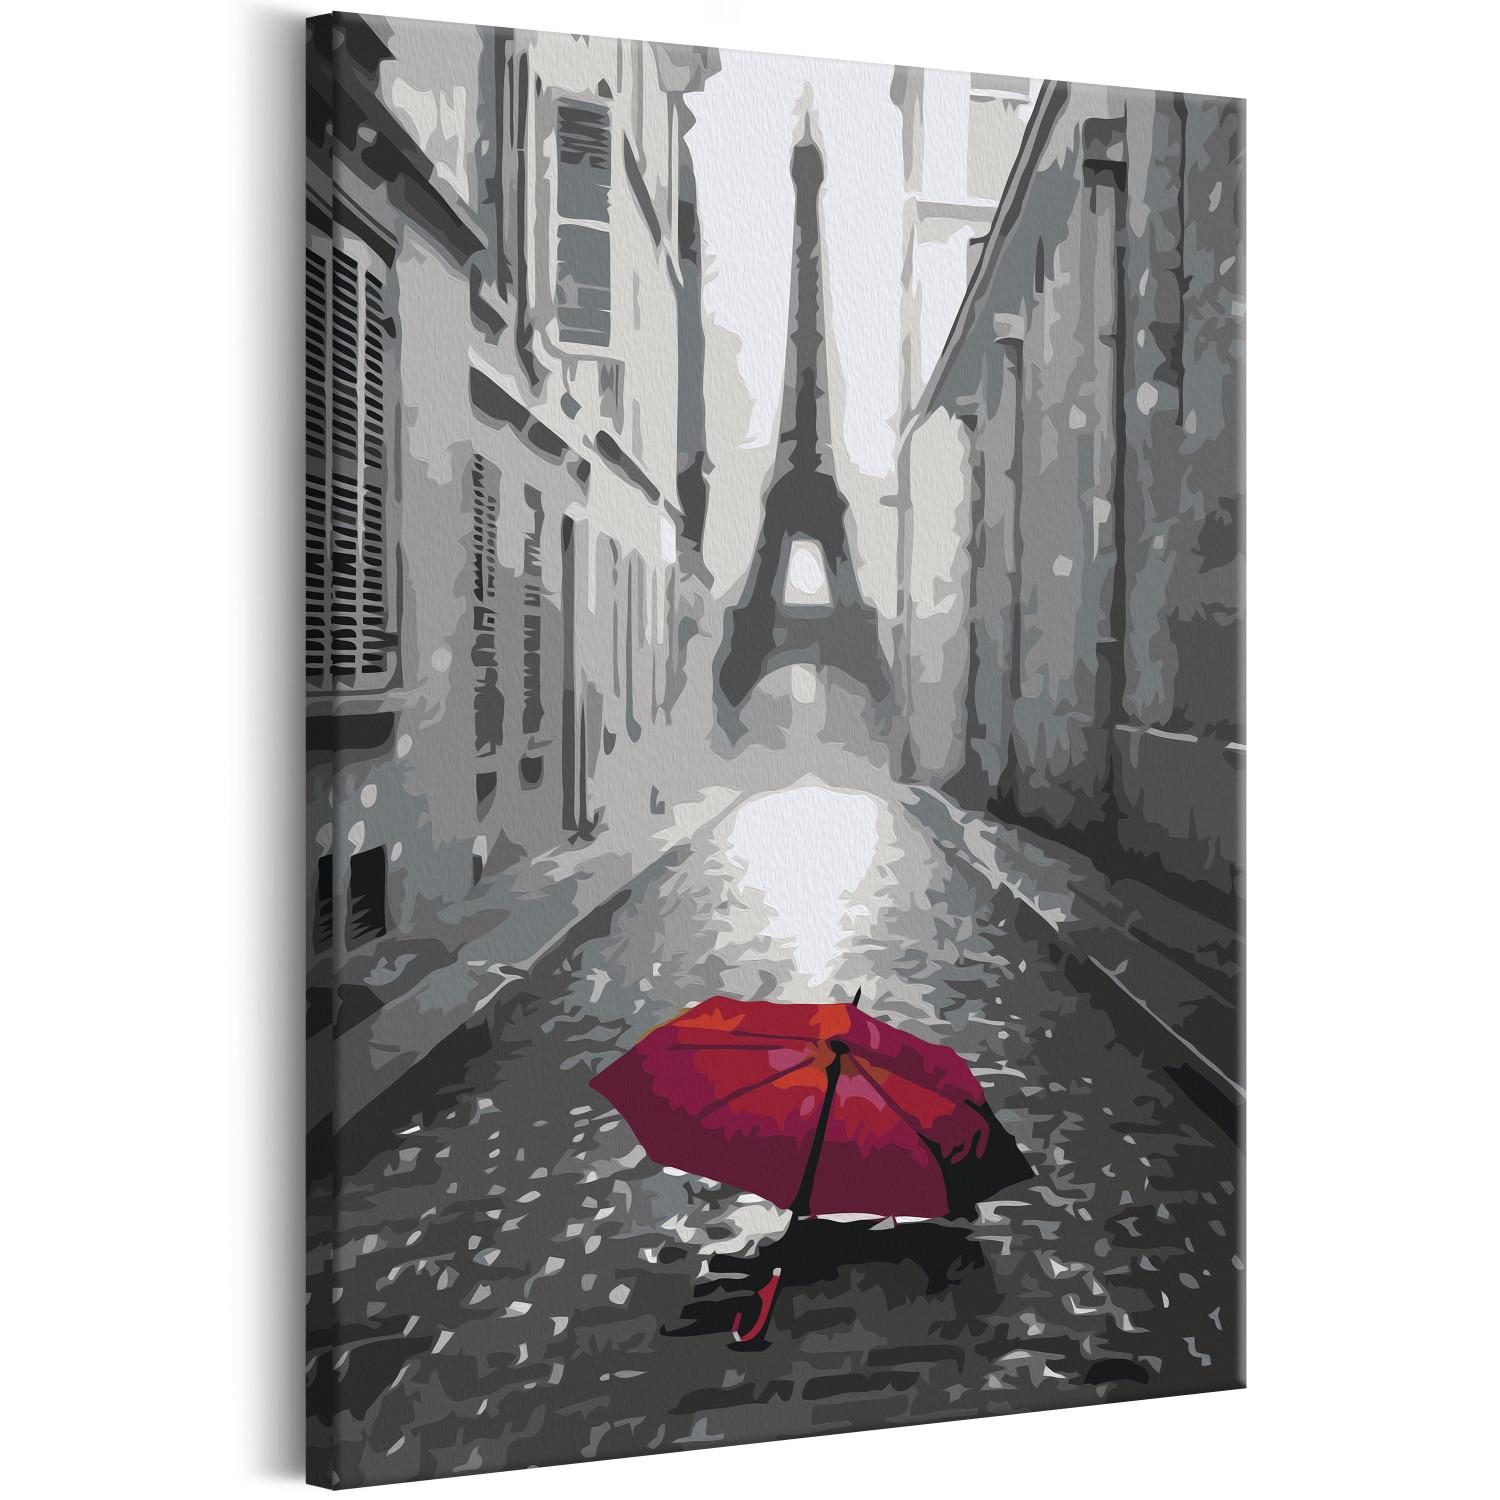 Paint by Number Kit Umbrella in Paris